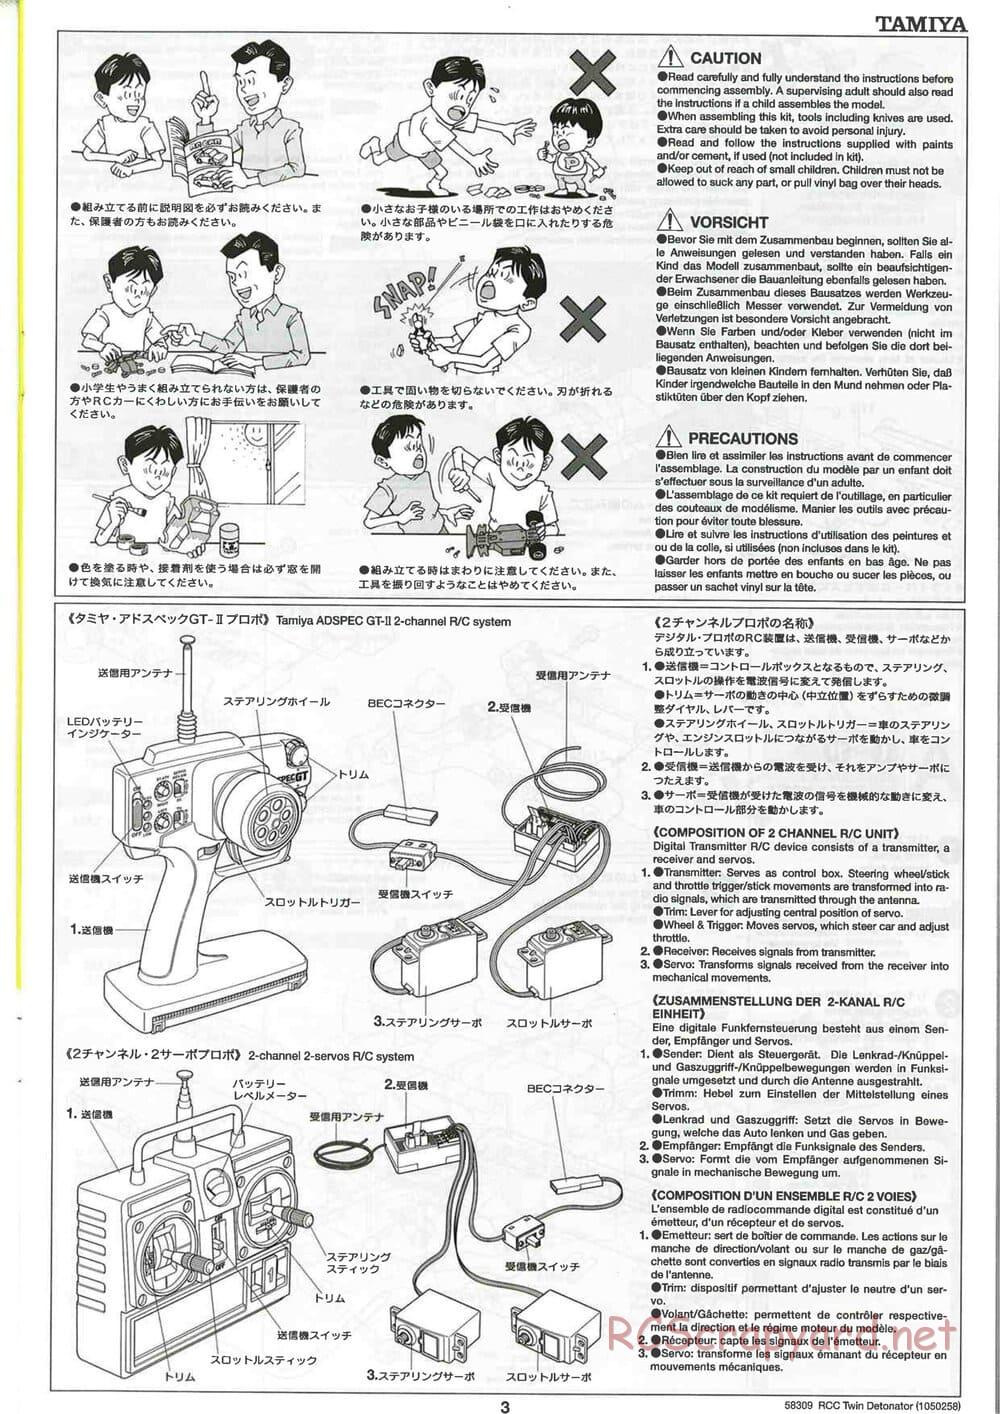 Tamiya - Twin Detonator - WR-01 Chassis - Manual - Page 3